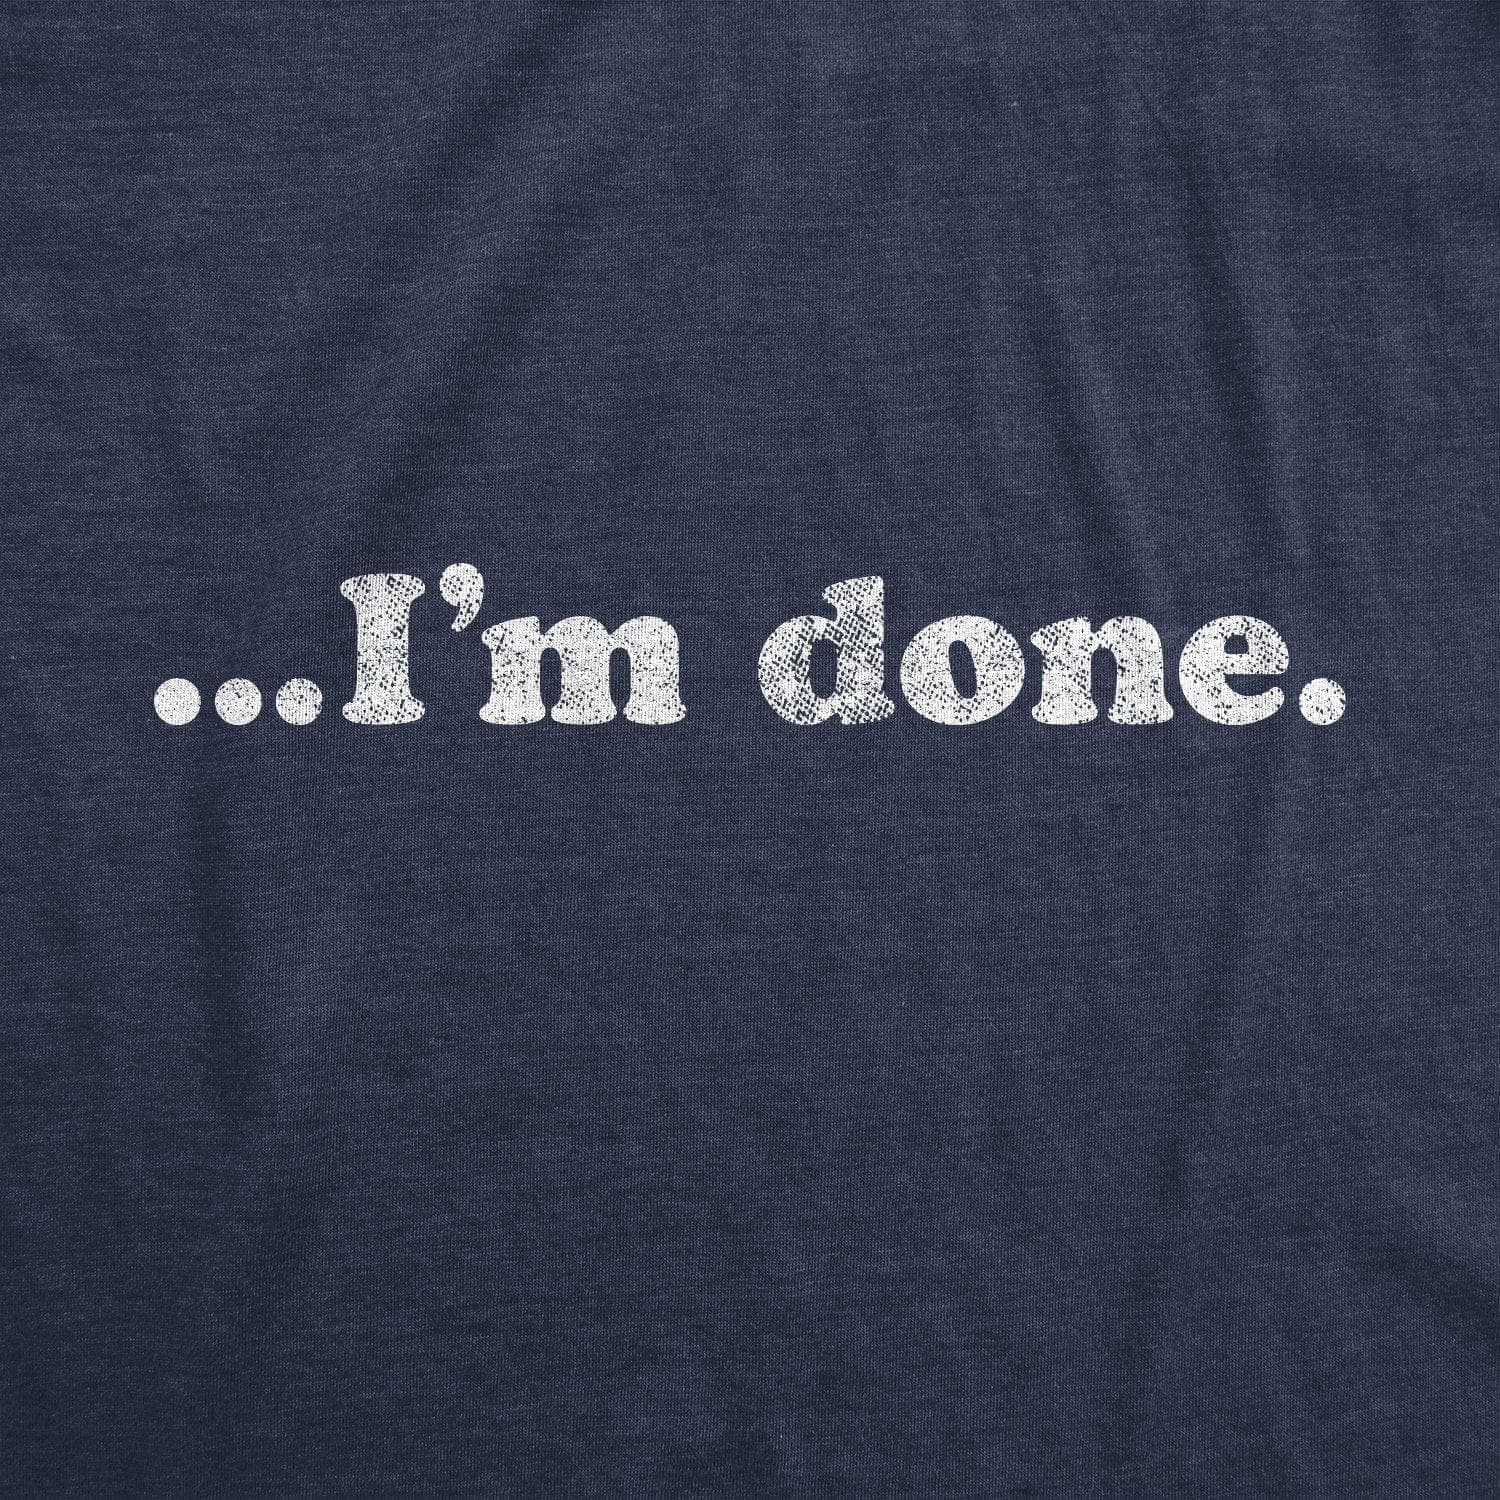 …I'm Done Women's Tshirt - Crazy Dog T-Shirts